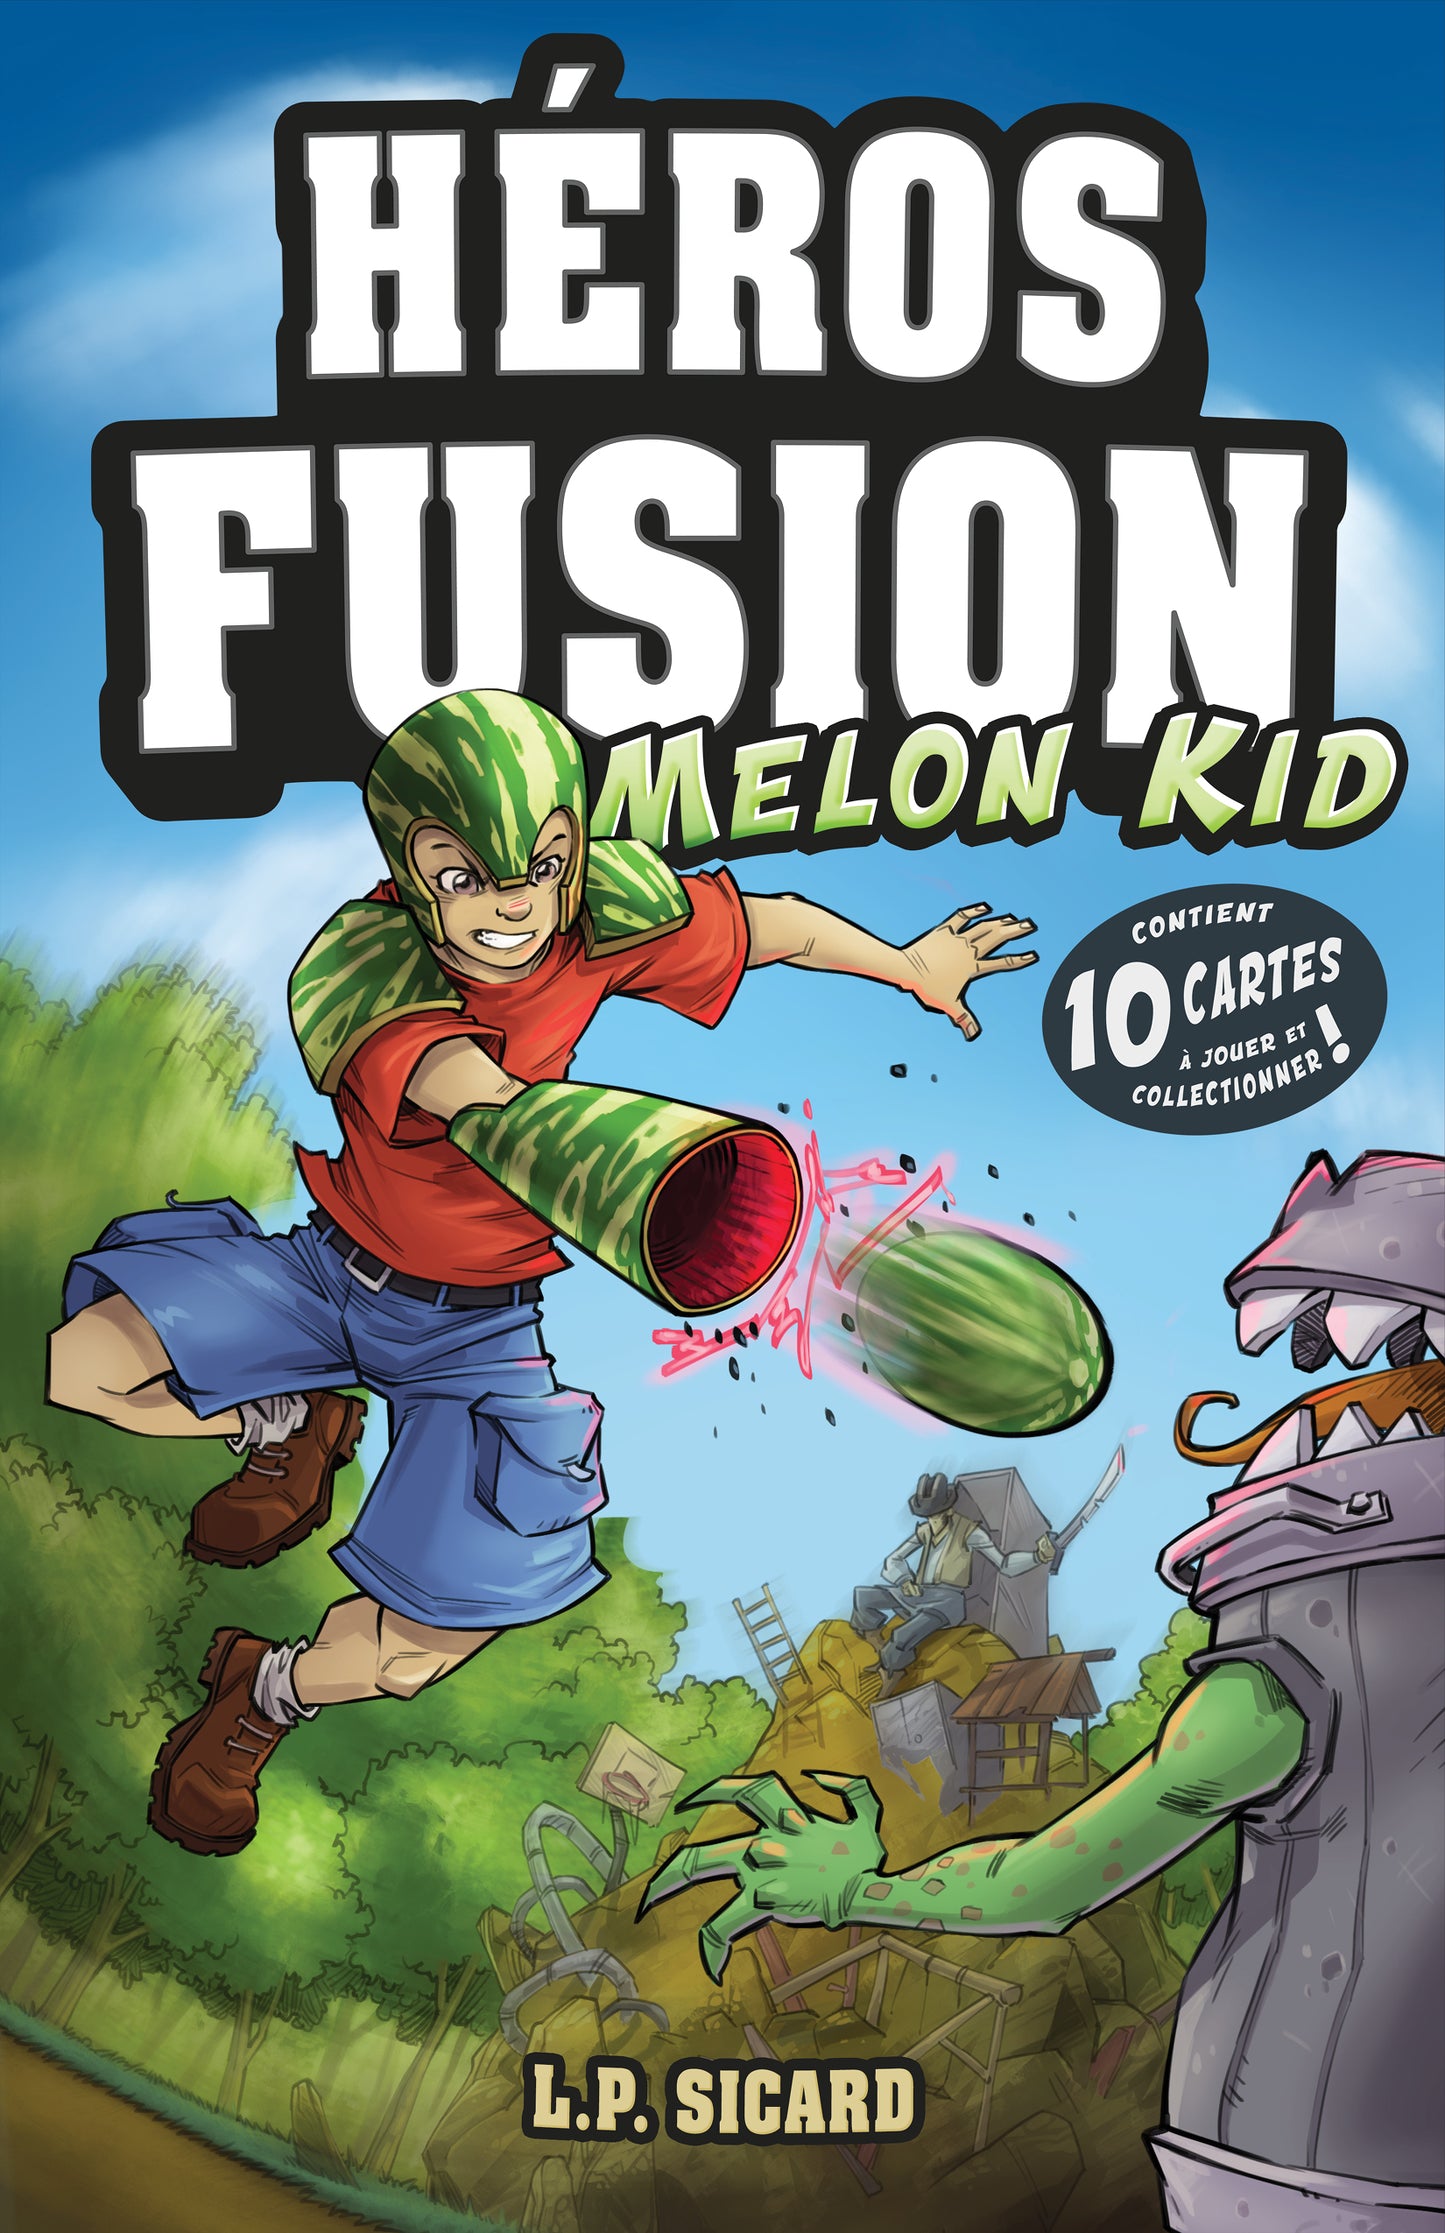 Melon Kid